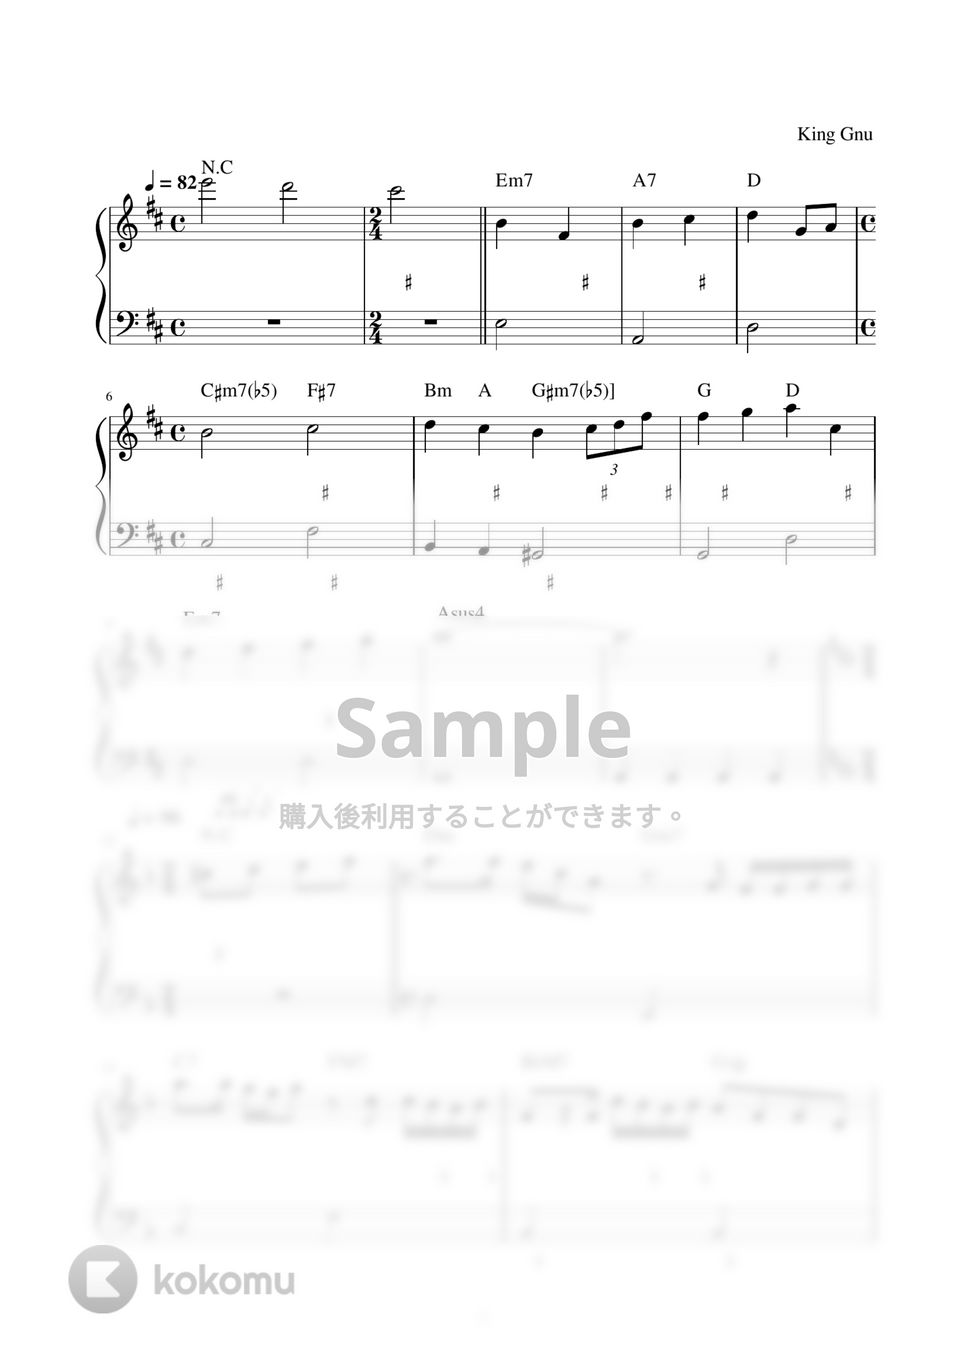 King Gnu - 逆夢 (ピアノ楽譜 / かんたん両手 / 歌詞付き / ドレミ付き / 初心者向き) by piano.tokyo